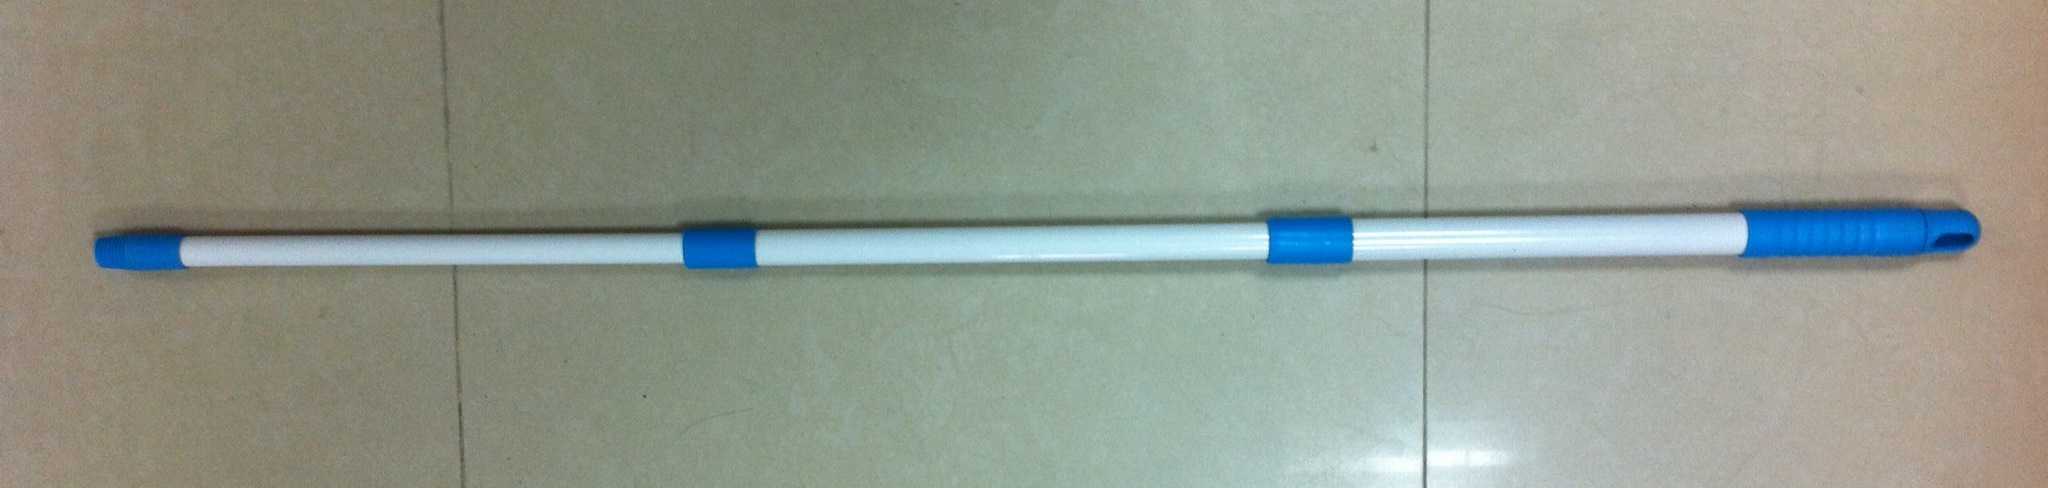 Telescopic aluminum mop handle